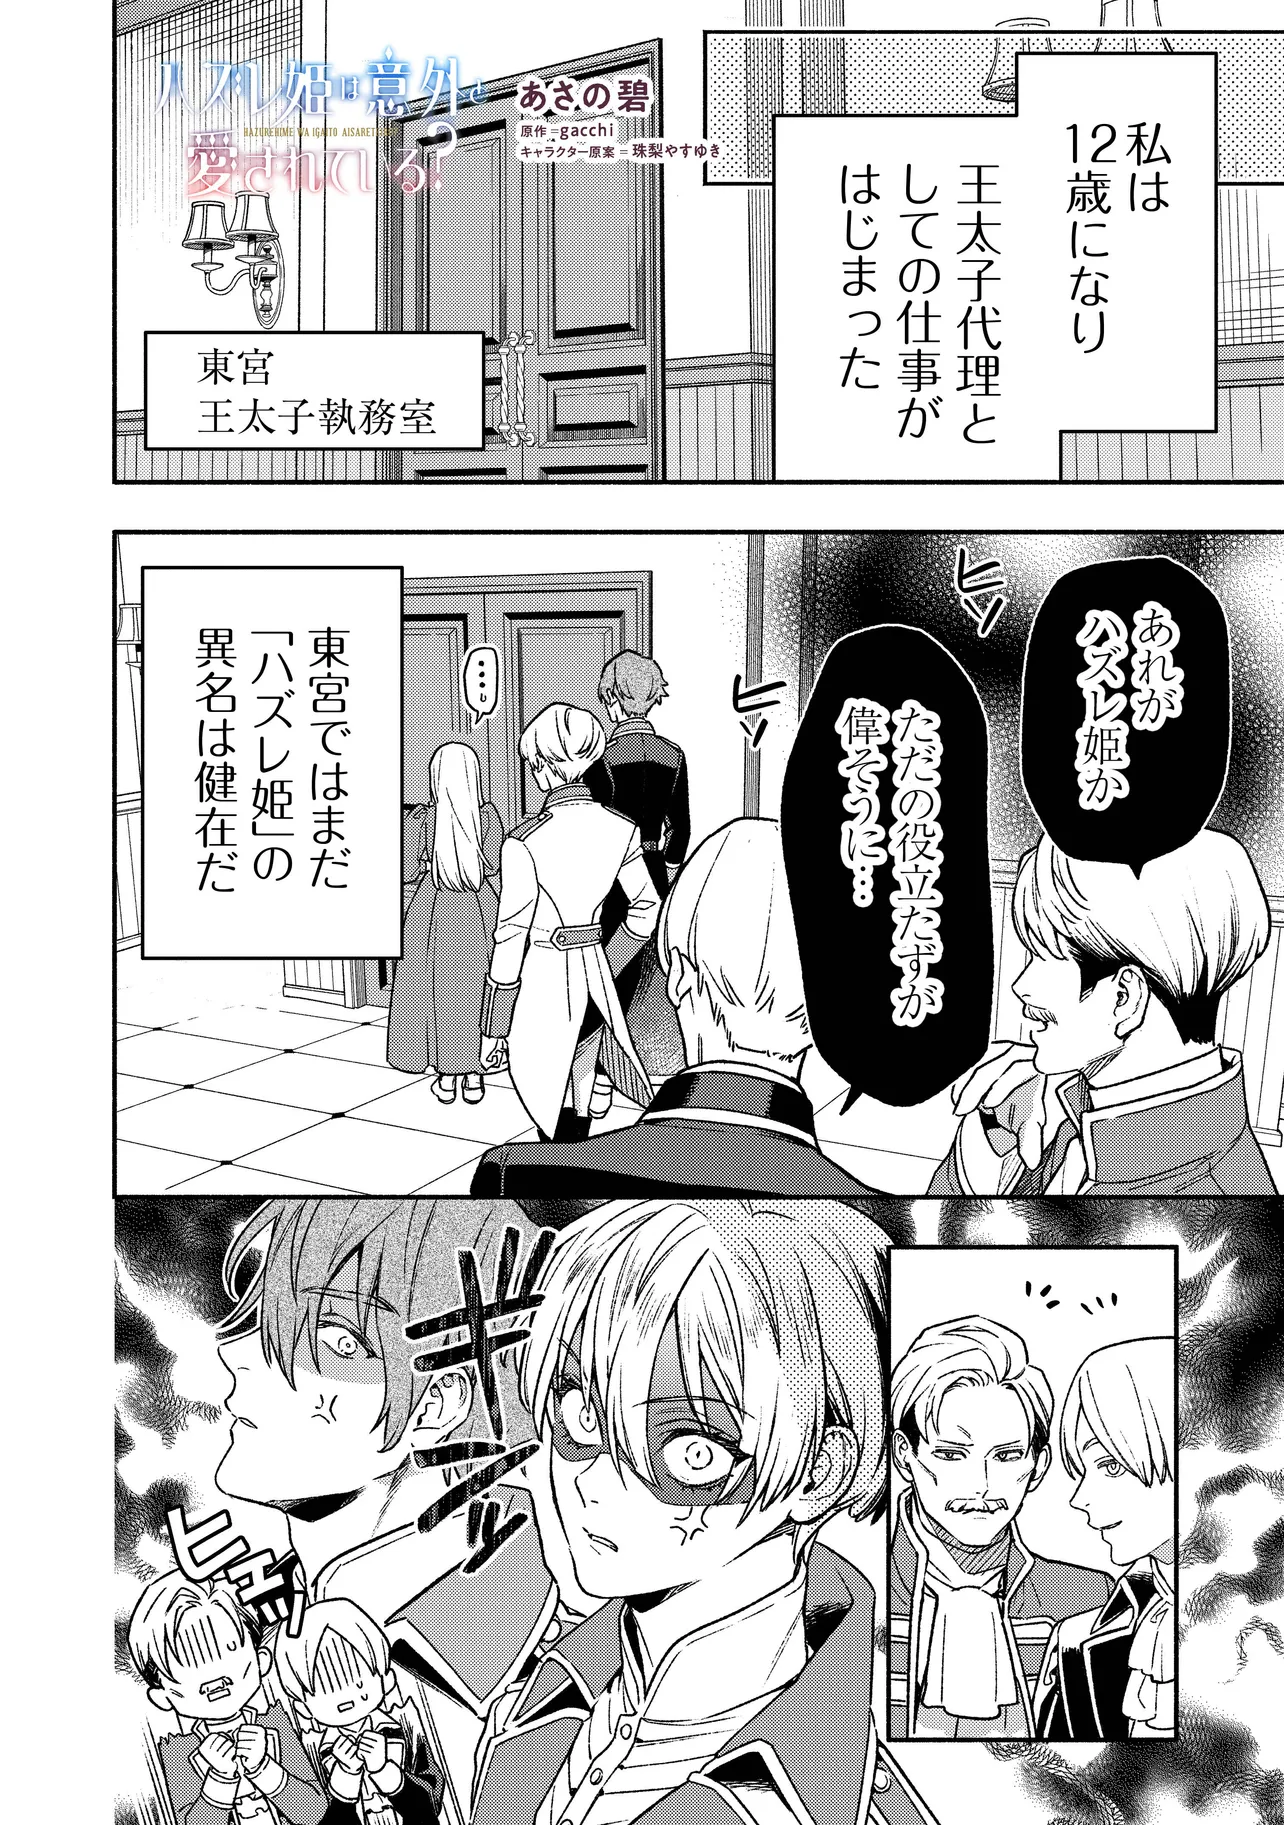 Hazure Hime wa Igaito Aisareteiru? - Chapter 4.2 - Page 1